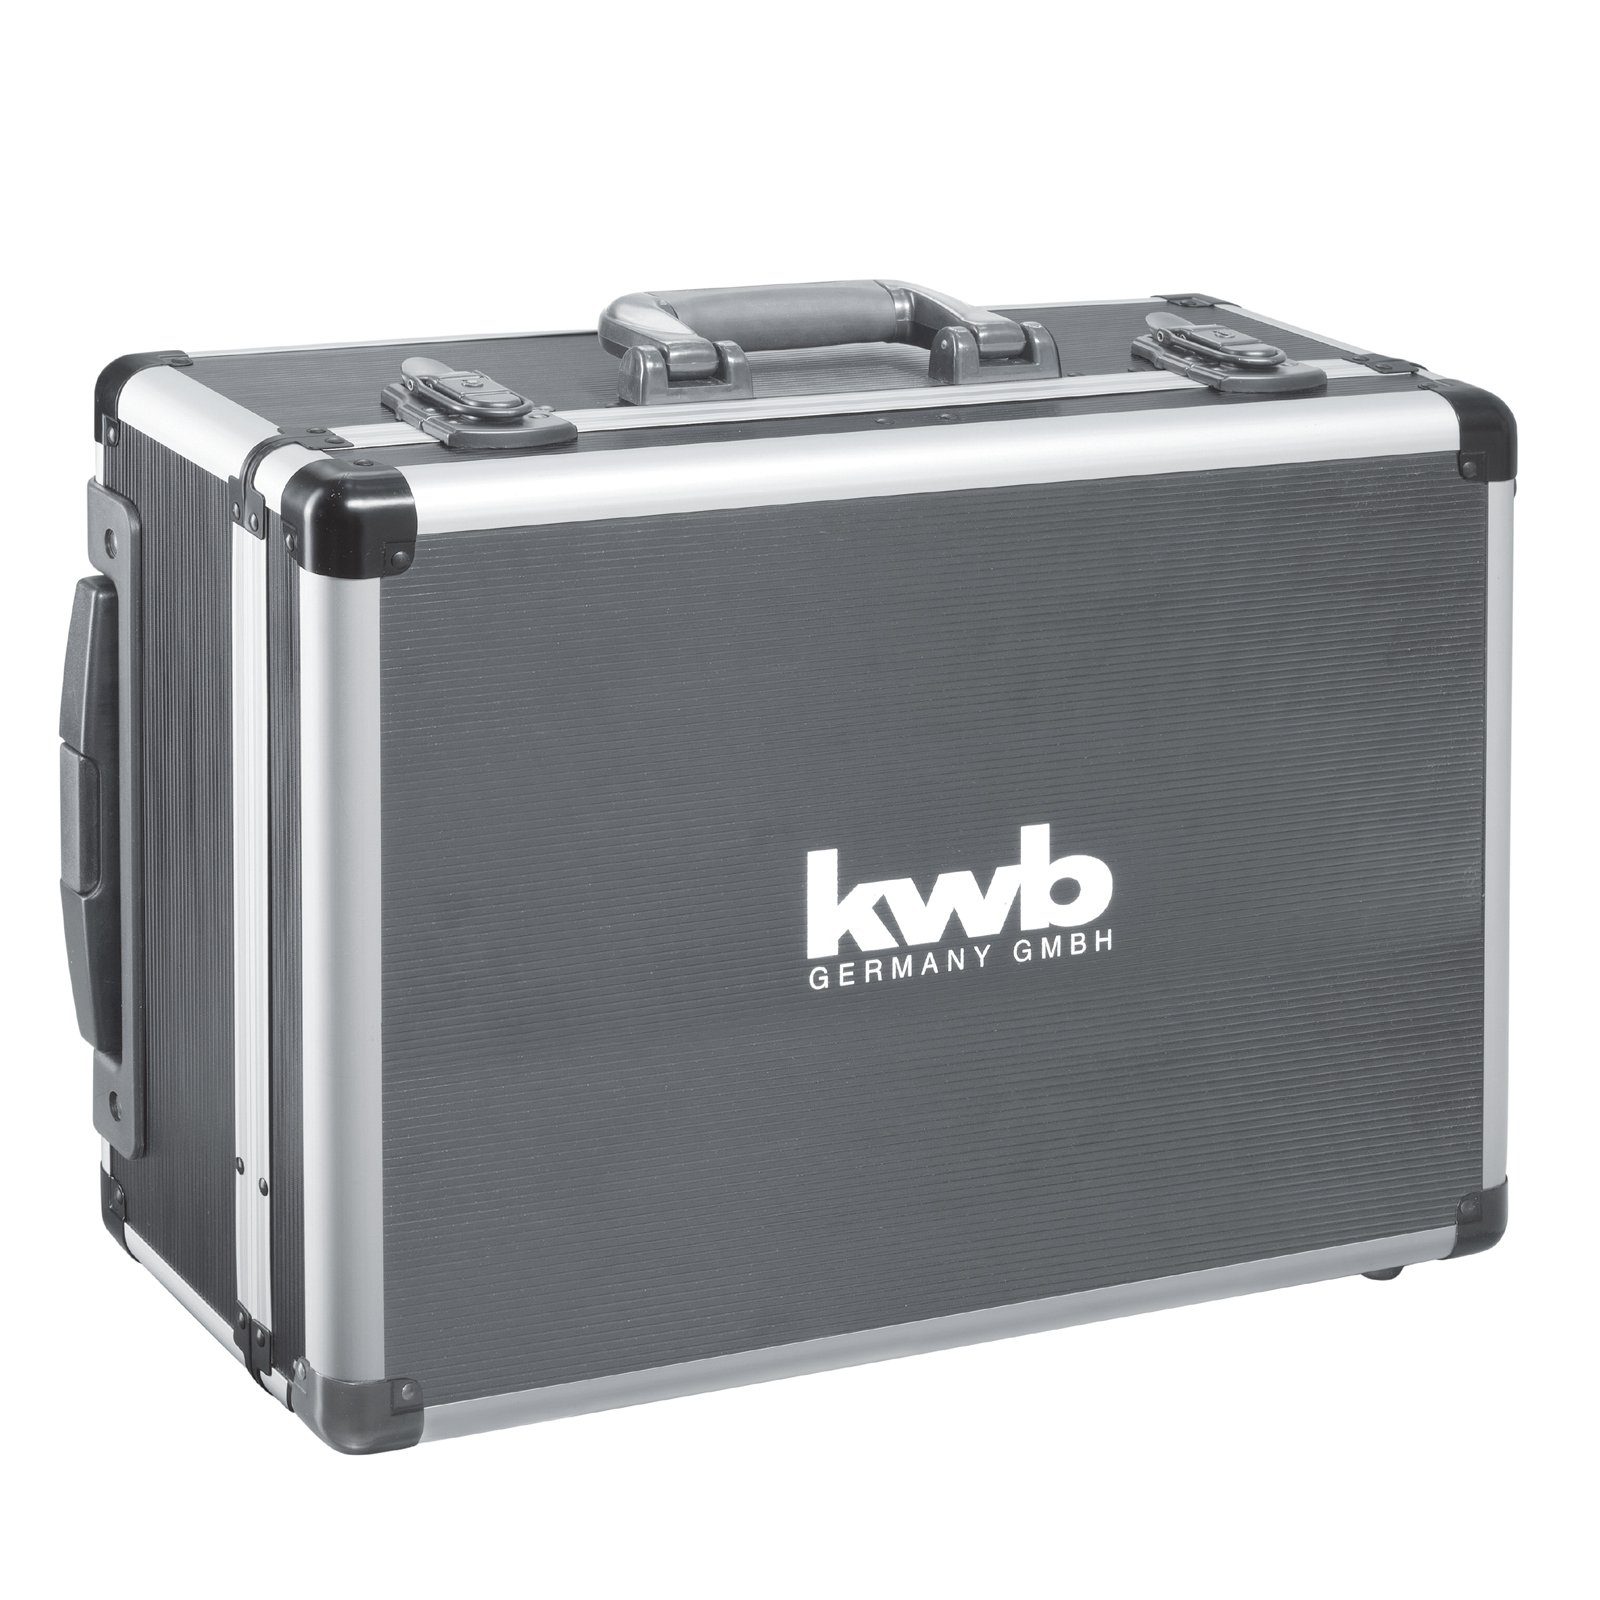 Werkzeugset kwb inkl. gefüllt, Trolley Werkzeug-Set, -teilig, 175 (Set) kwb Werkzeug-Koffer